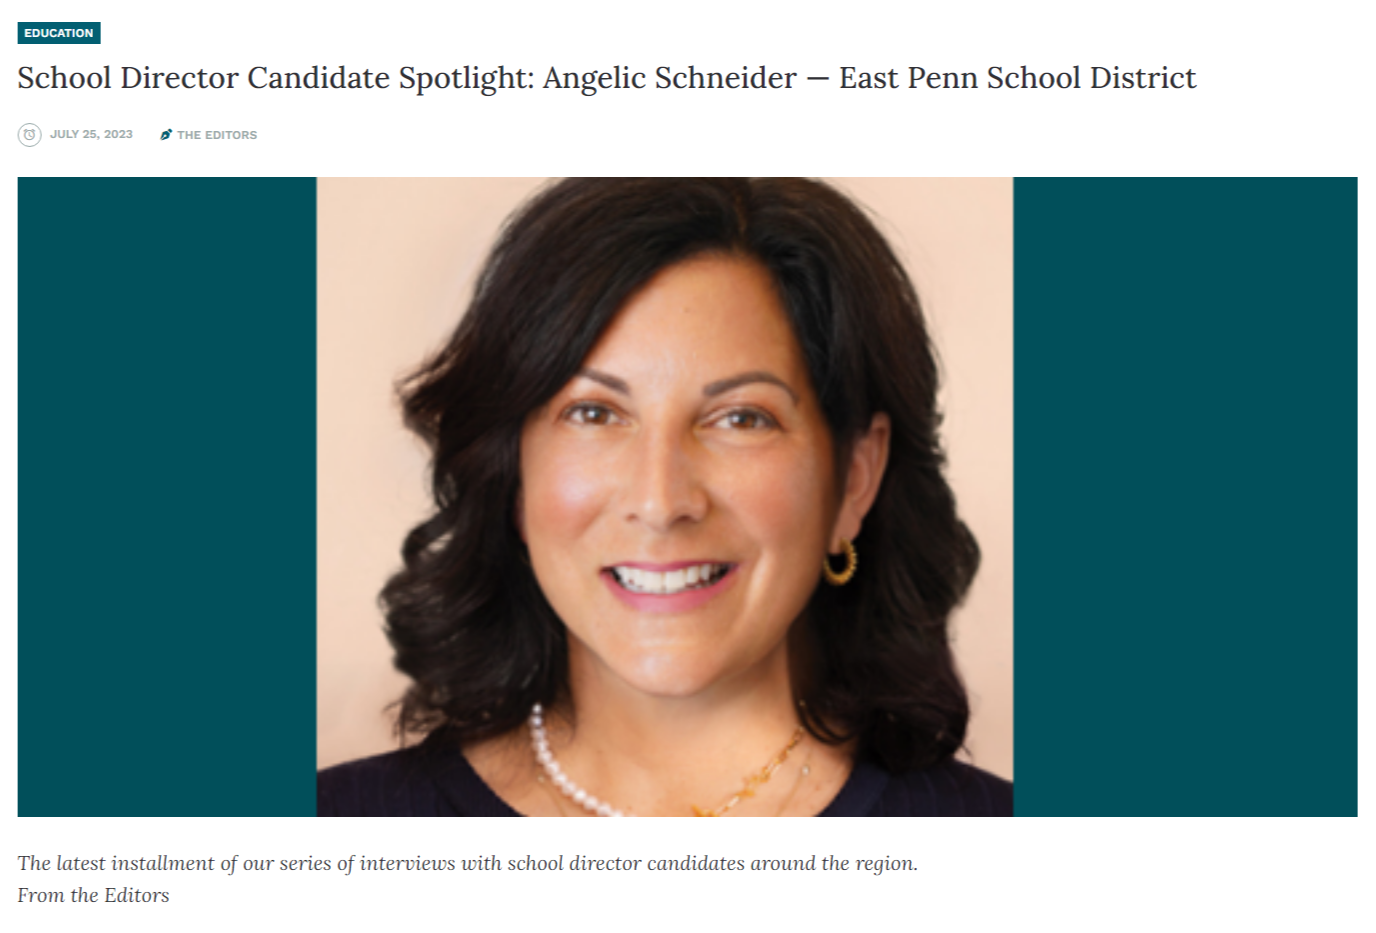 School Director Candidate Spotlight: Angelic Schneider - East Penn School District